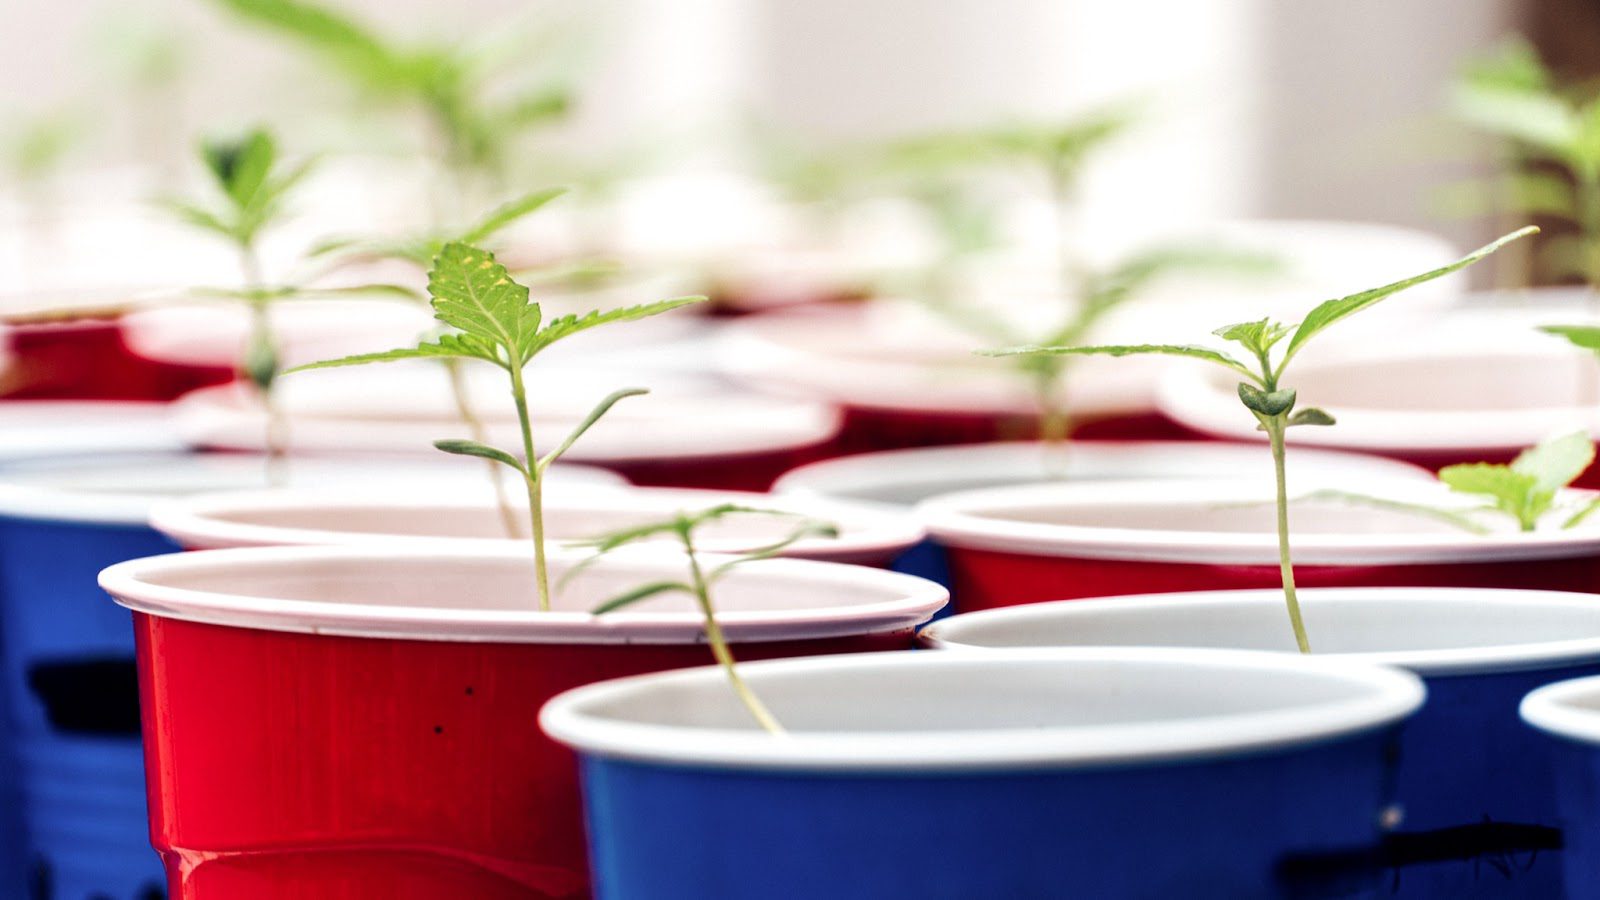 newly transferred young marijuana plant in pots